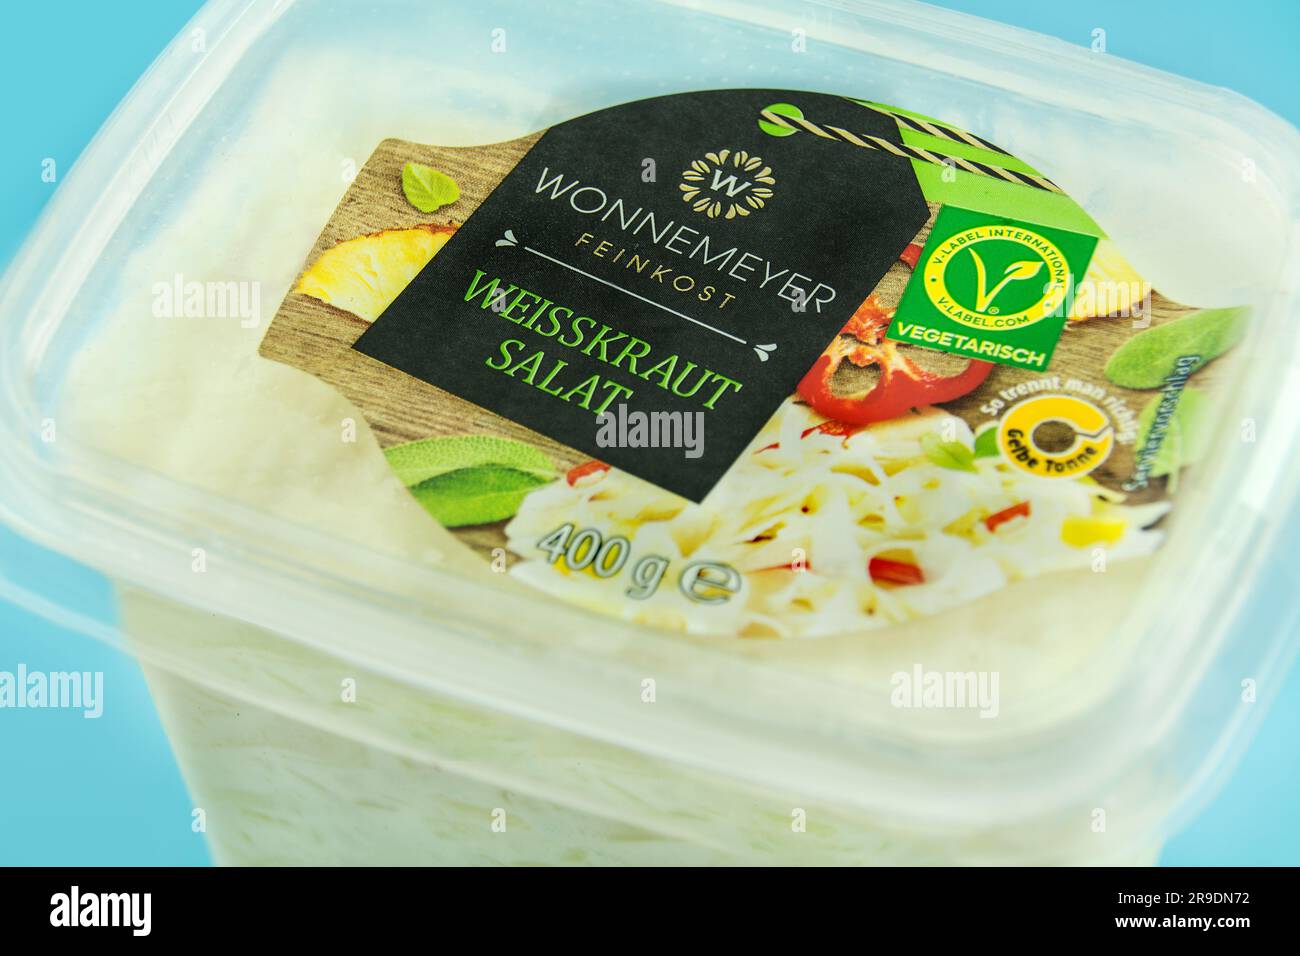 Wonnemeyer Feinkost Weisskraut Salat im Becher gros plan Banque D'Images